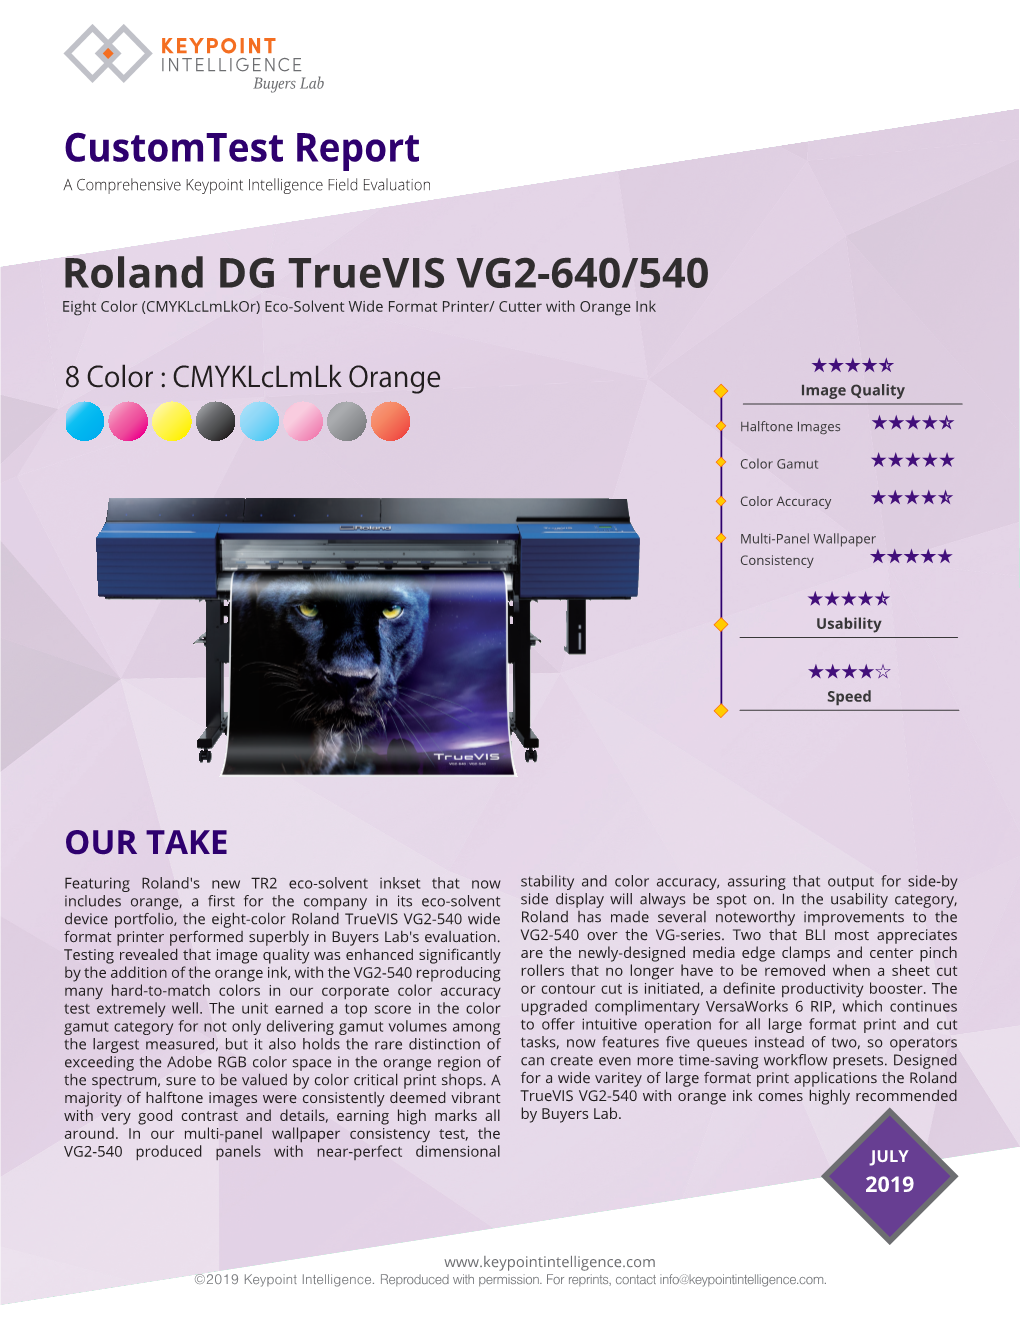 Roland DG Truevis VG2-640/540 Eight Color (Cmyklclmlkor)VG2 Eco-Solvent Wide Format Printer/ Cutter with Orangesg2 Ink